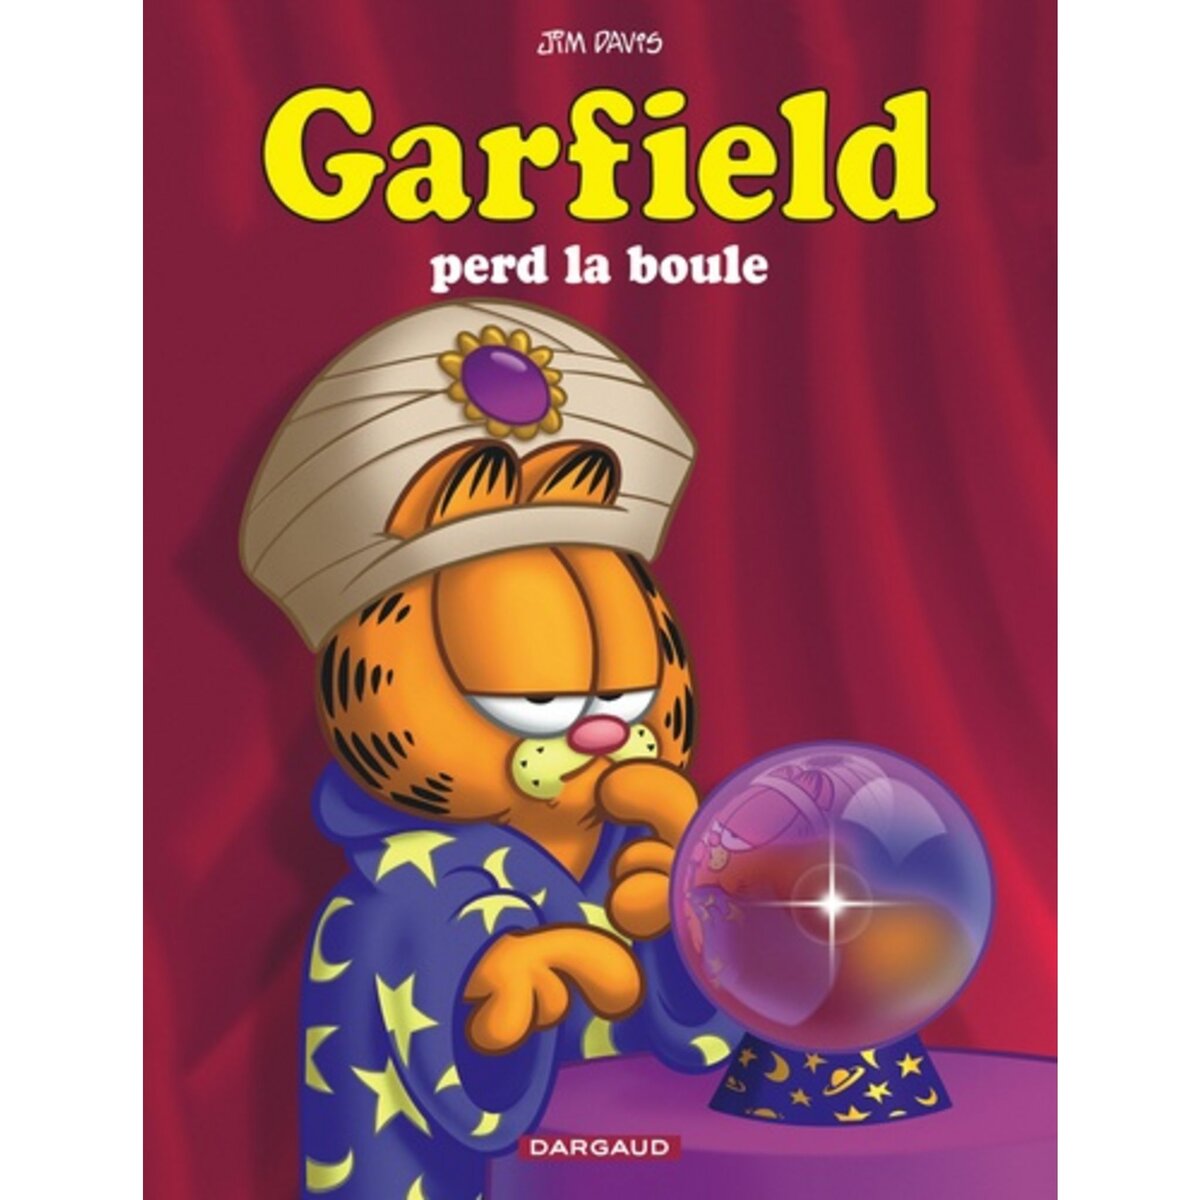  GARFIELD TOME 61 : GARFIELD PERD LA BOULE, Davis Jim